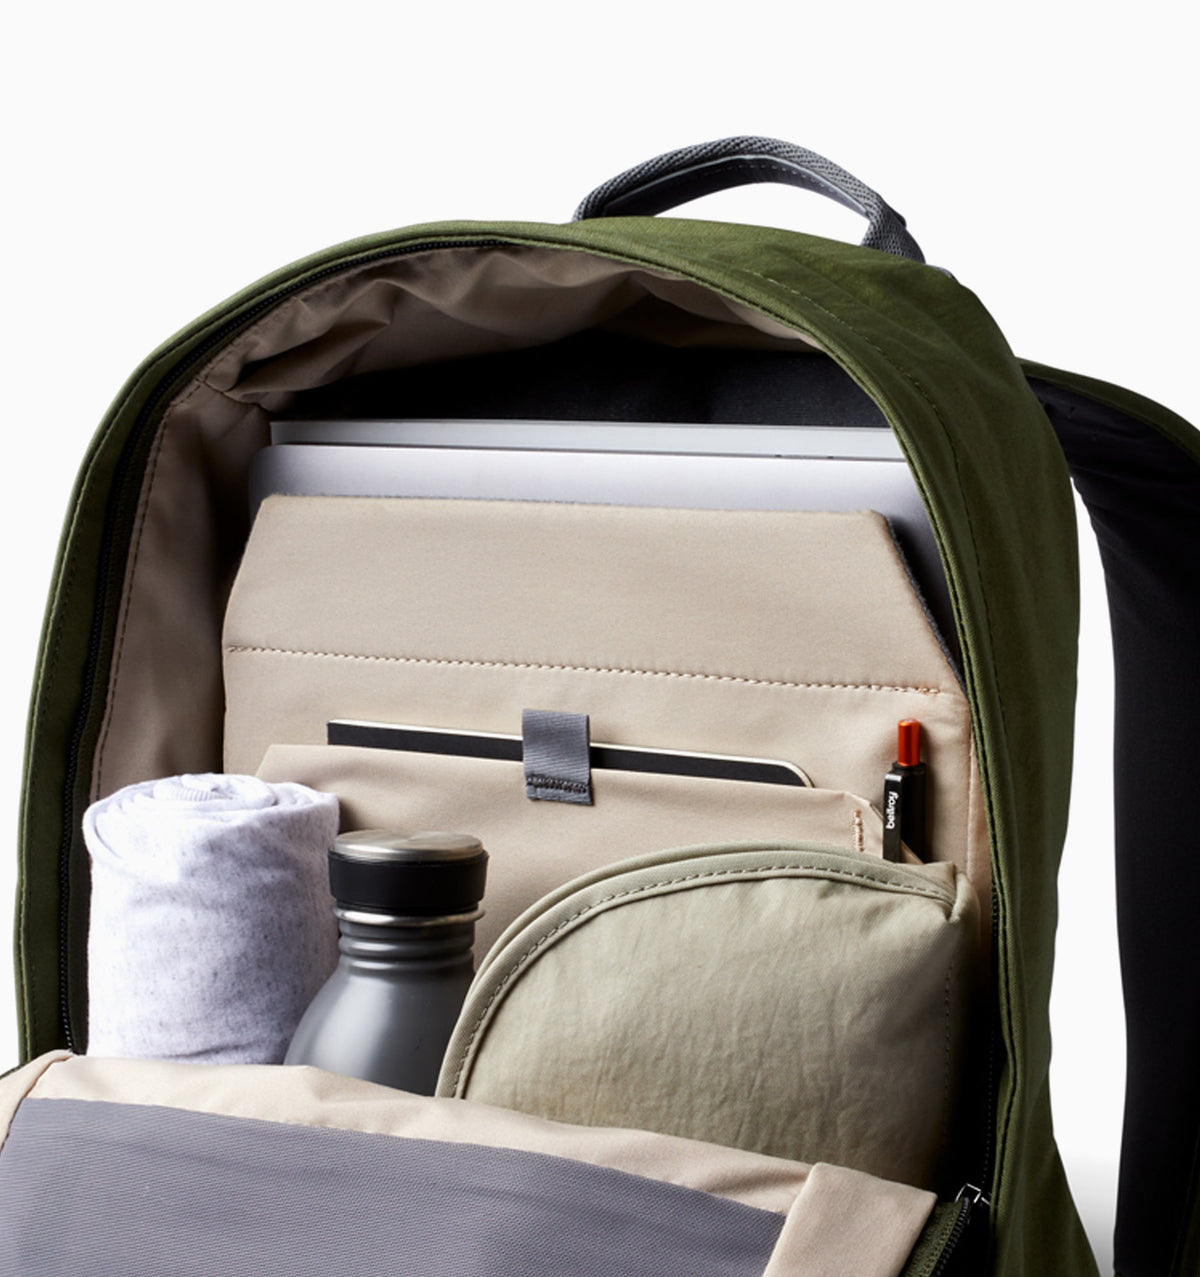 Bellroy Classic Backpack Compact - Ranger Green